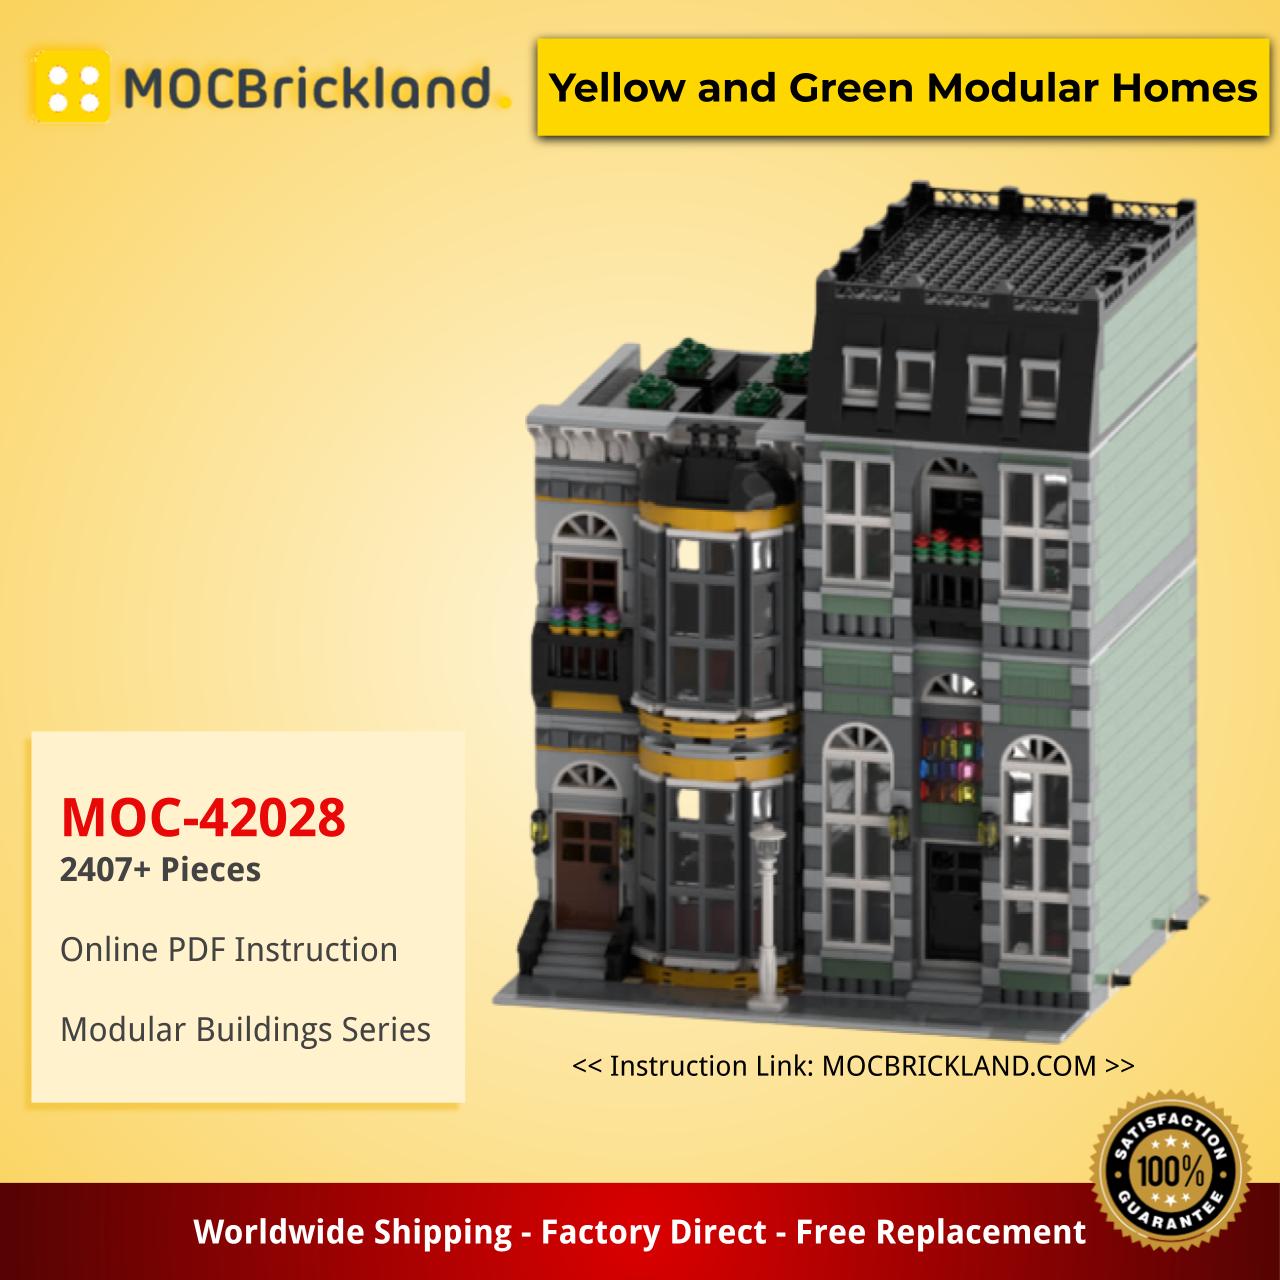 Modular Buildings MOC-42028 Yellow and Green Modular Homes by legosam36 MOCBRICKLAND